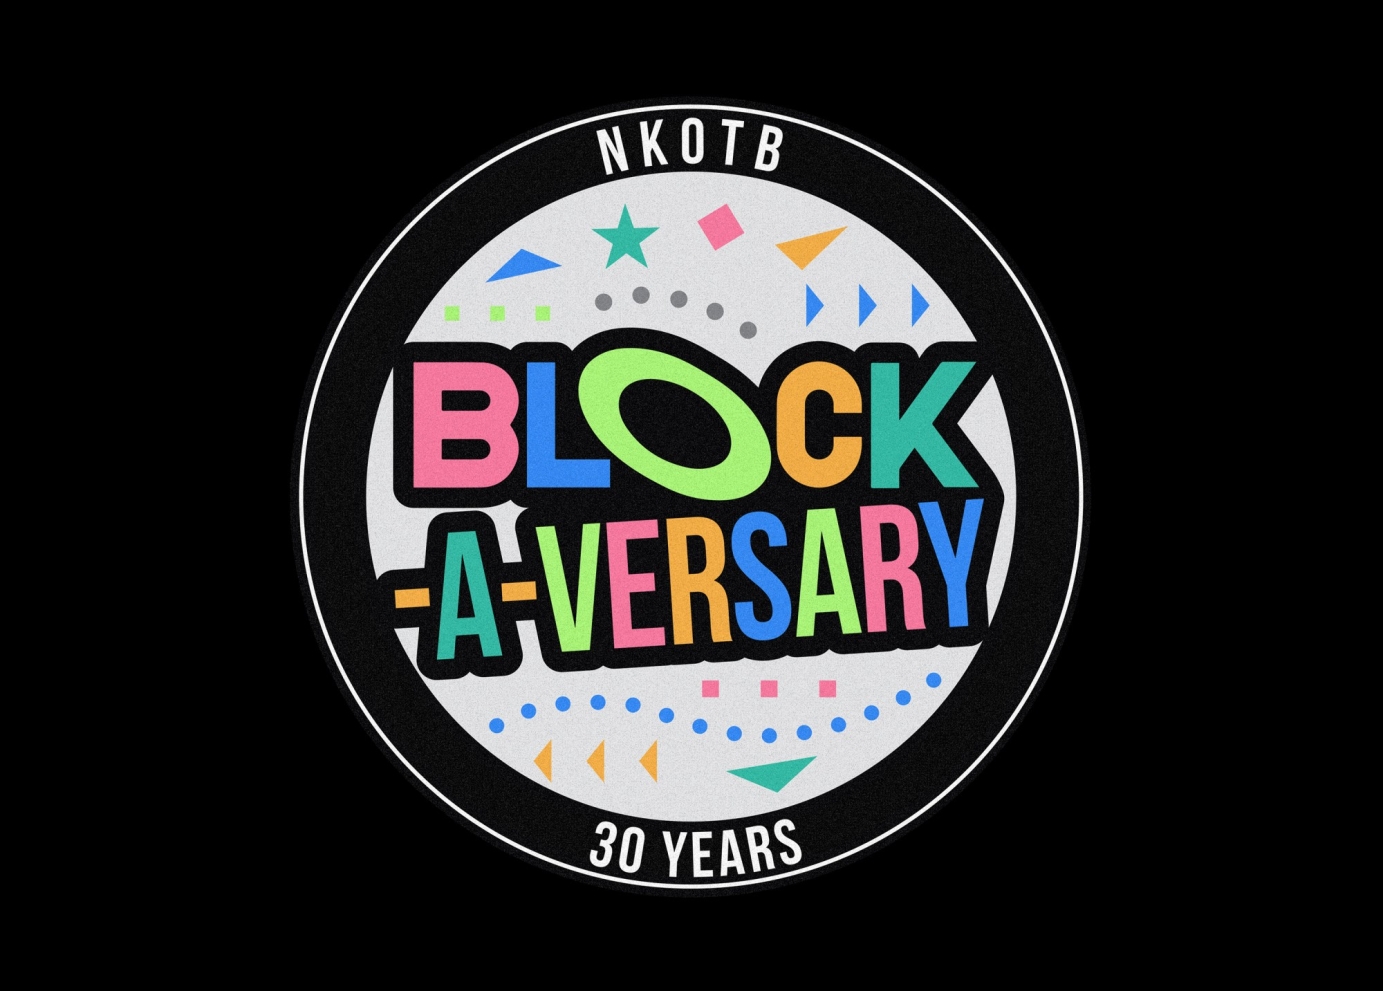 Block-a-versary cc.jpg